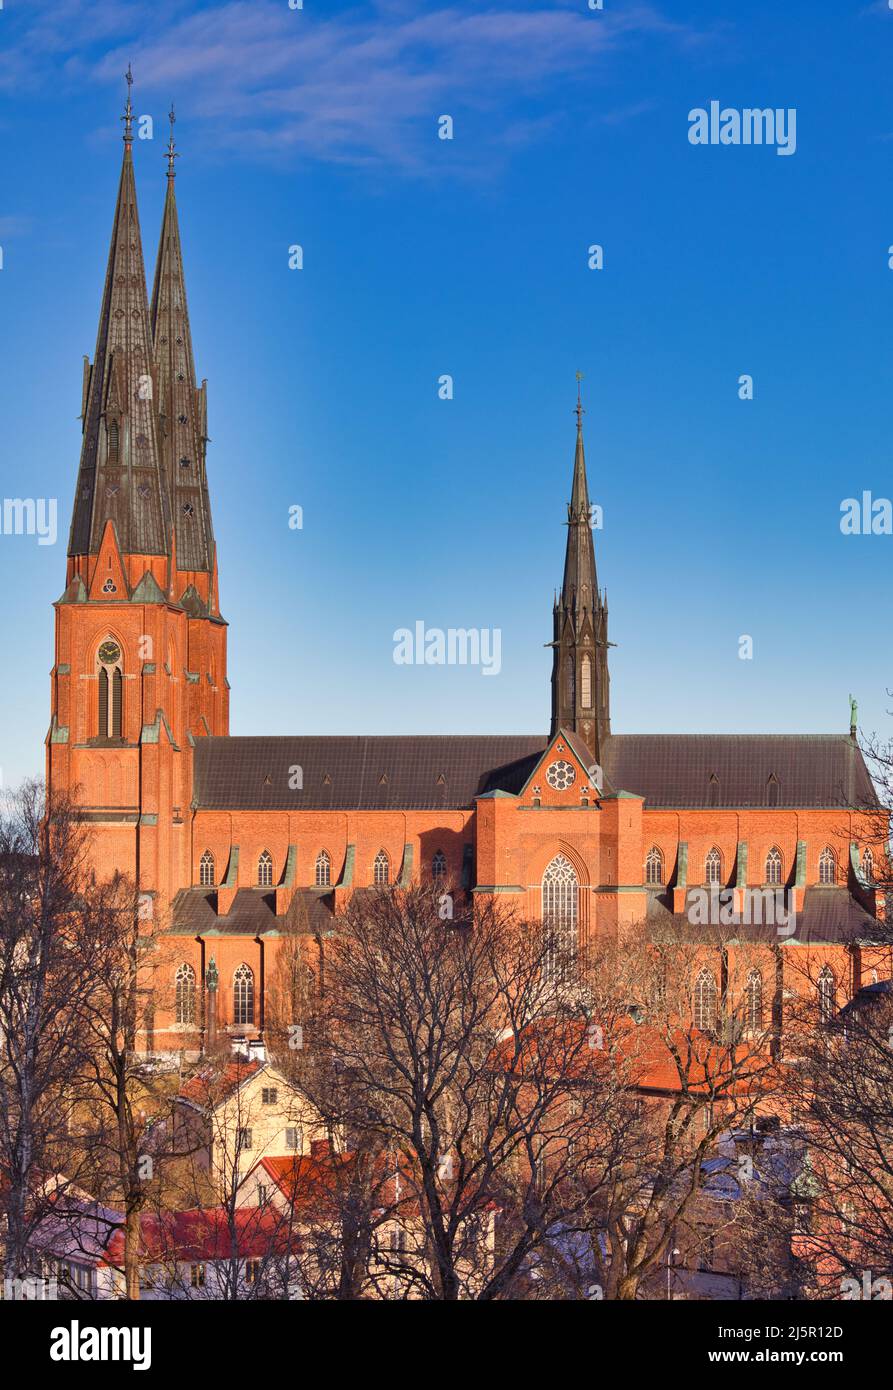 Spires of 13th century Gothic French Gothic Uppsala Cathedral (Uppsala Domkyrka) the tallest in Scandinavia, Uppsala, Uppland, Sweden Stock Photo